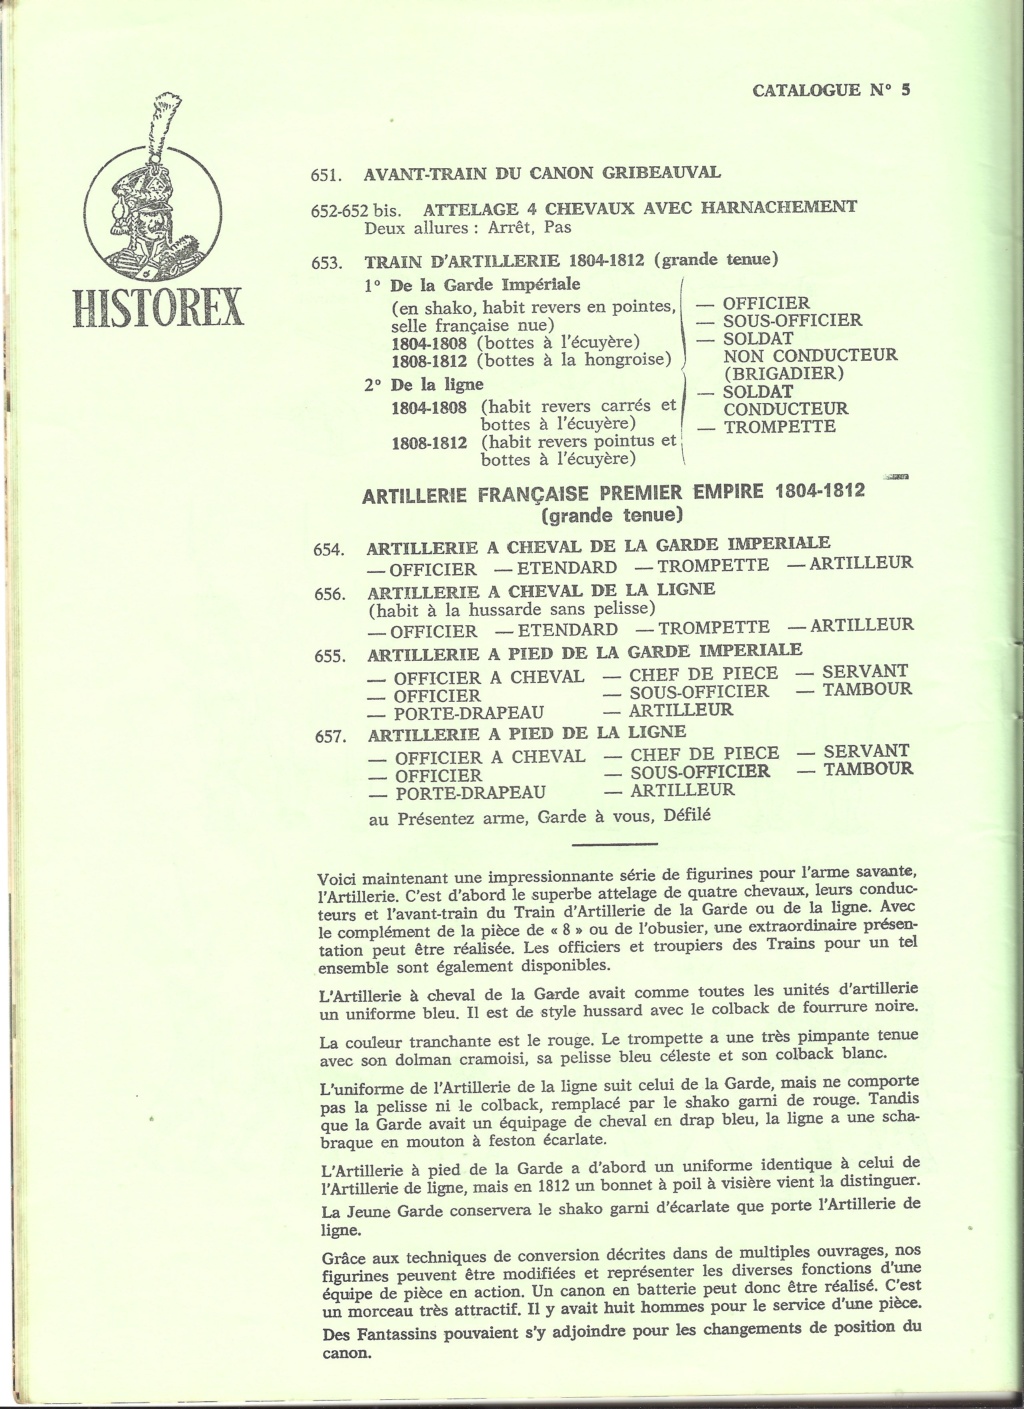 [HISTOREX 1976] Catalogue 1976  Histor26